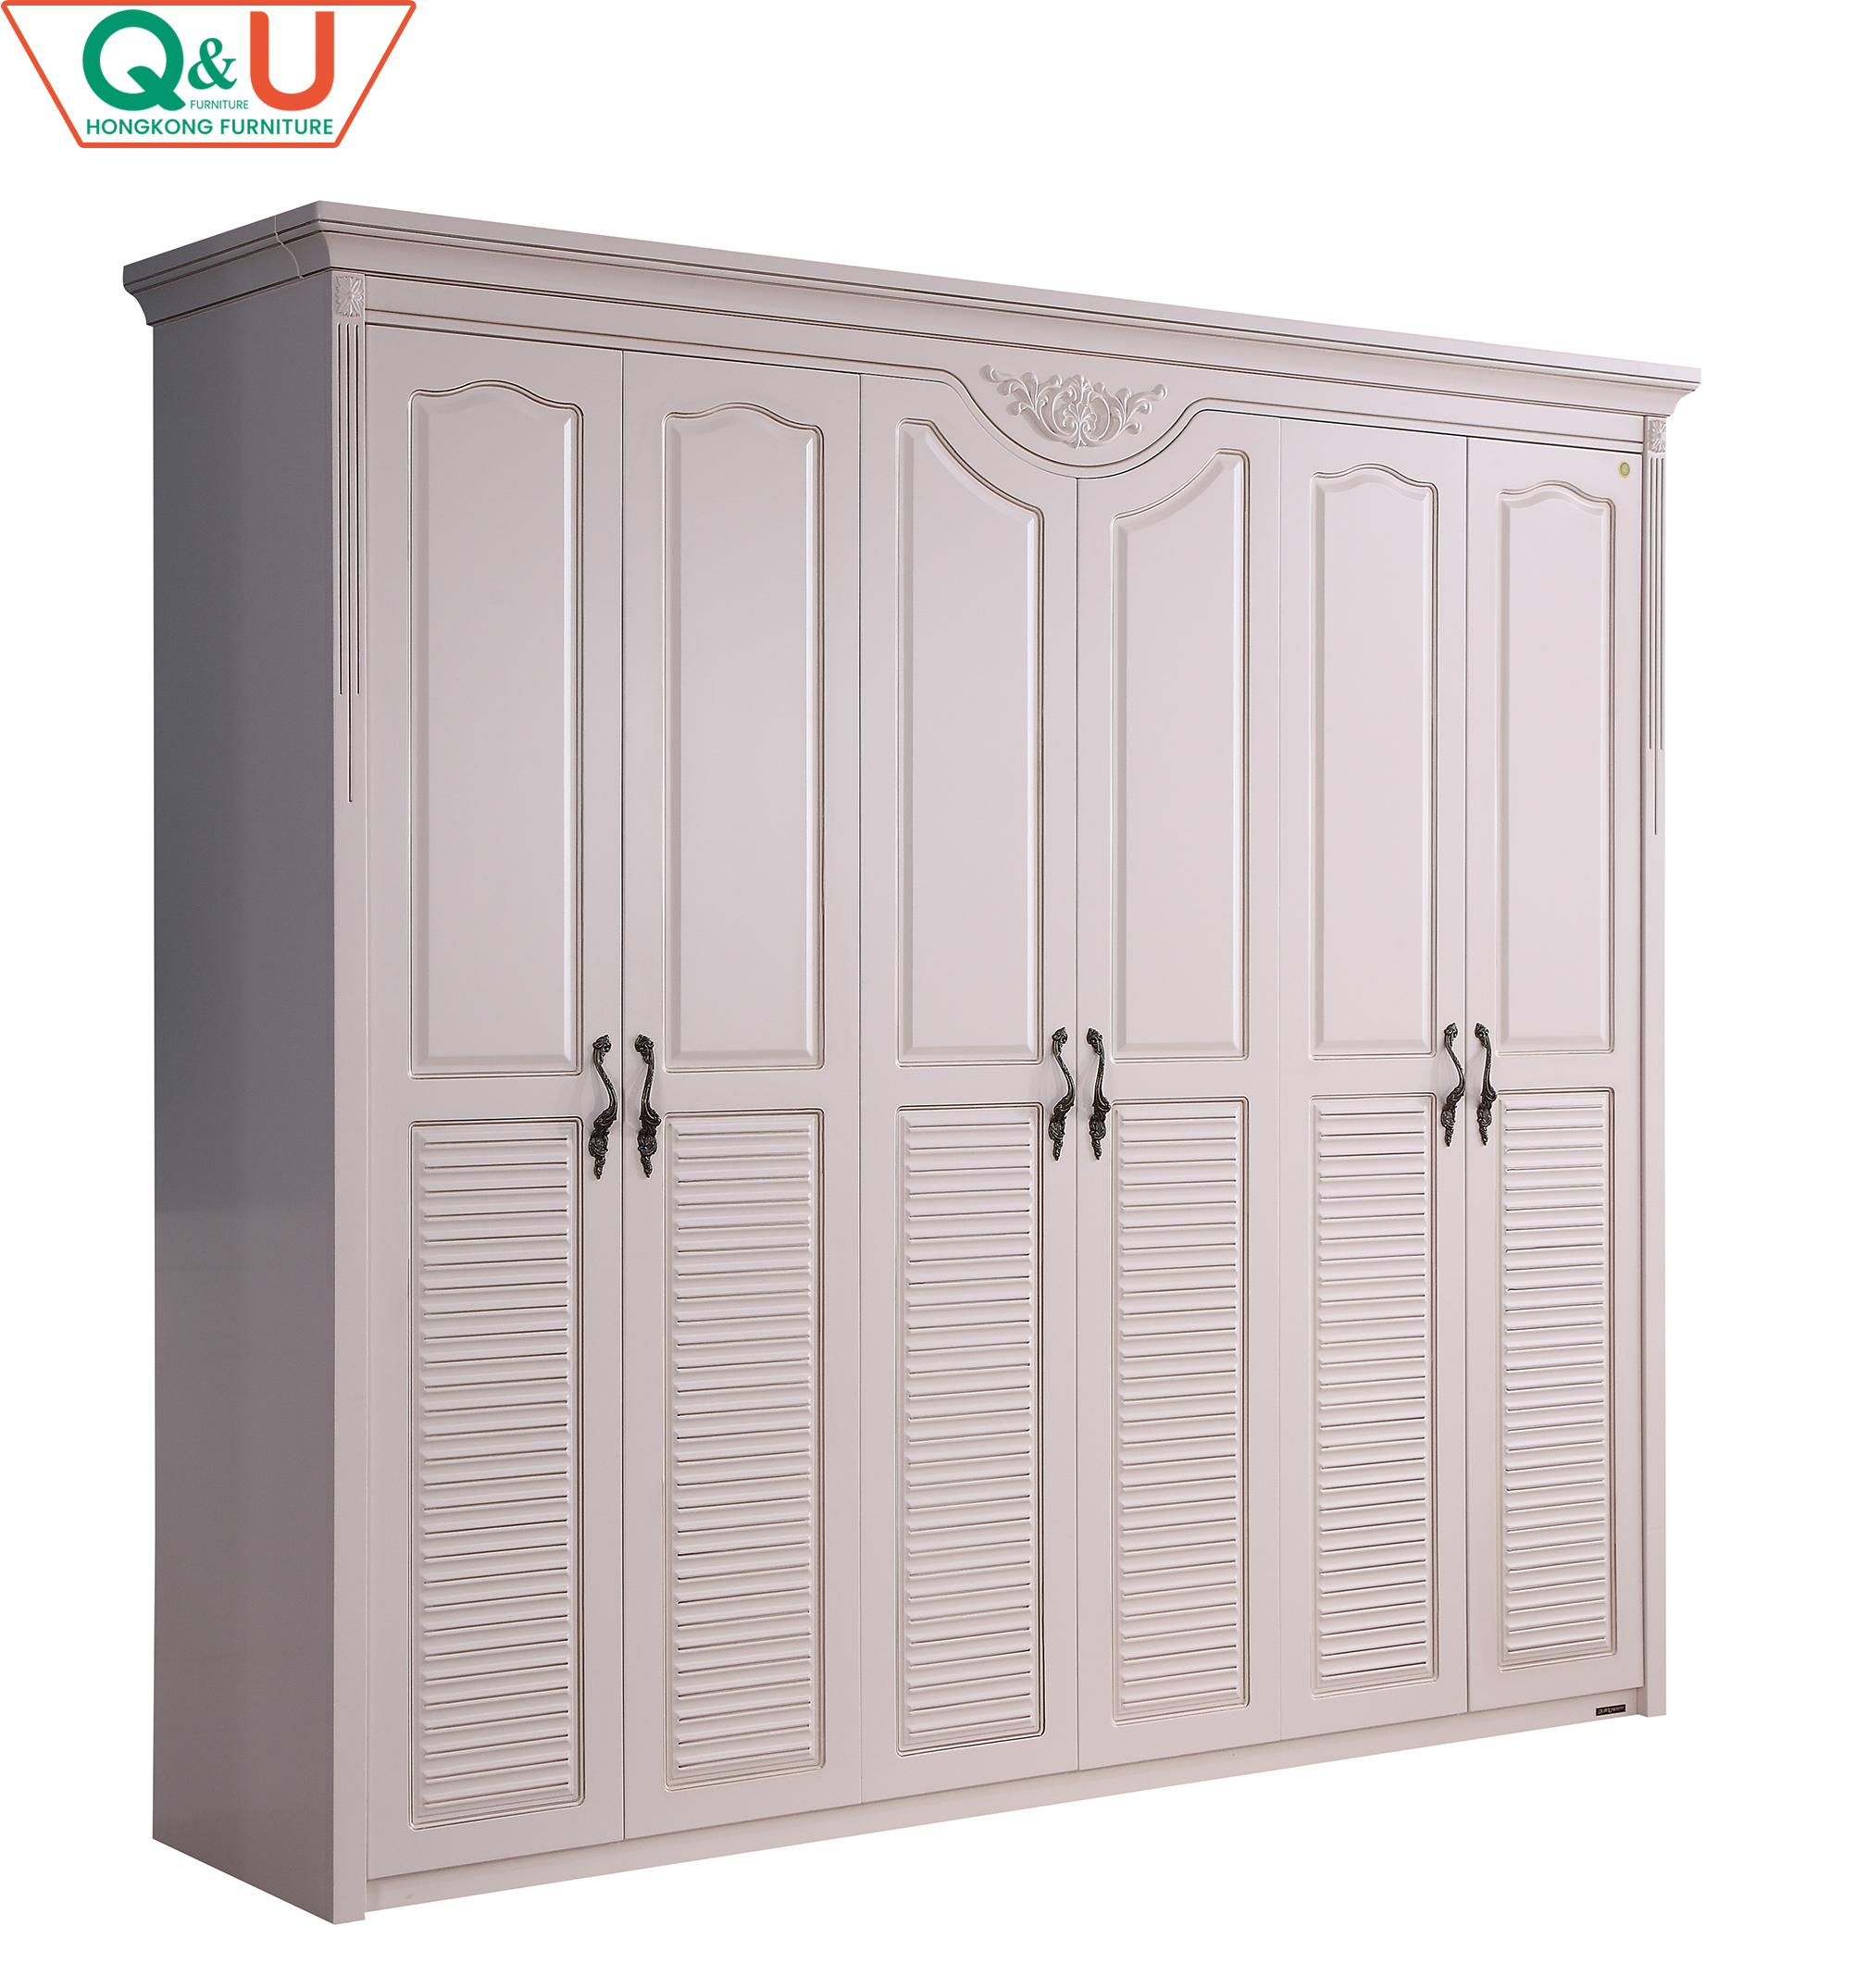 quanu-qu-furniture-west-coast-amorous-feelings-design-6-door-cabinet-61603-1